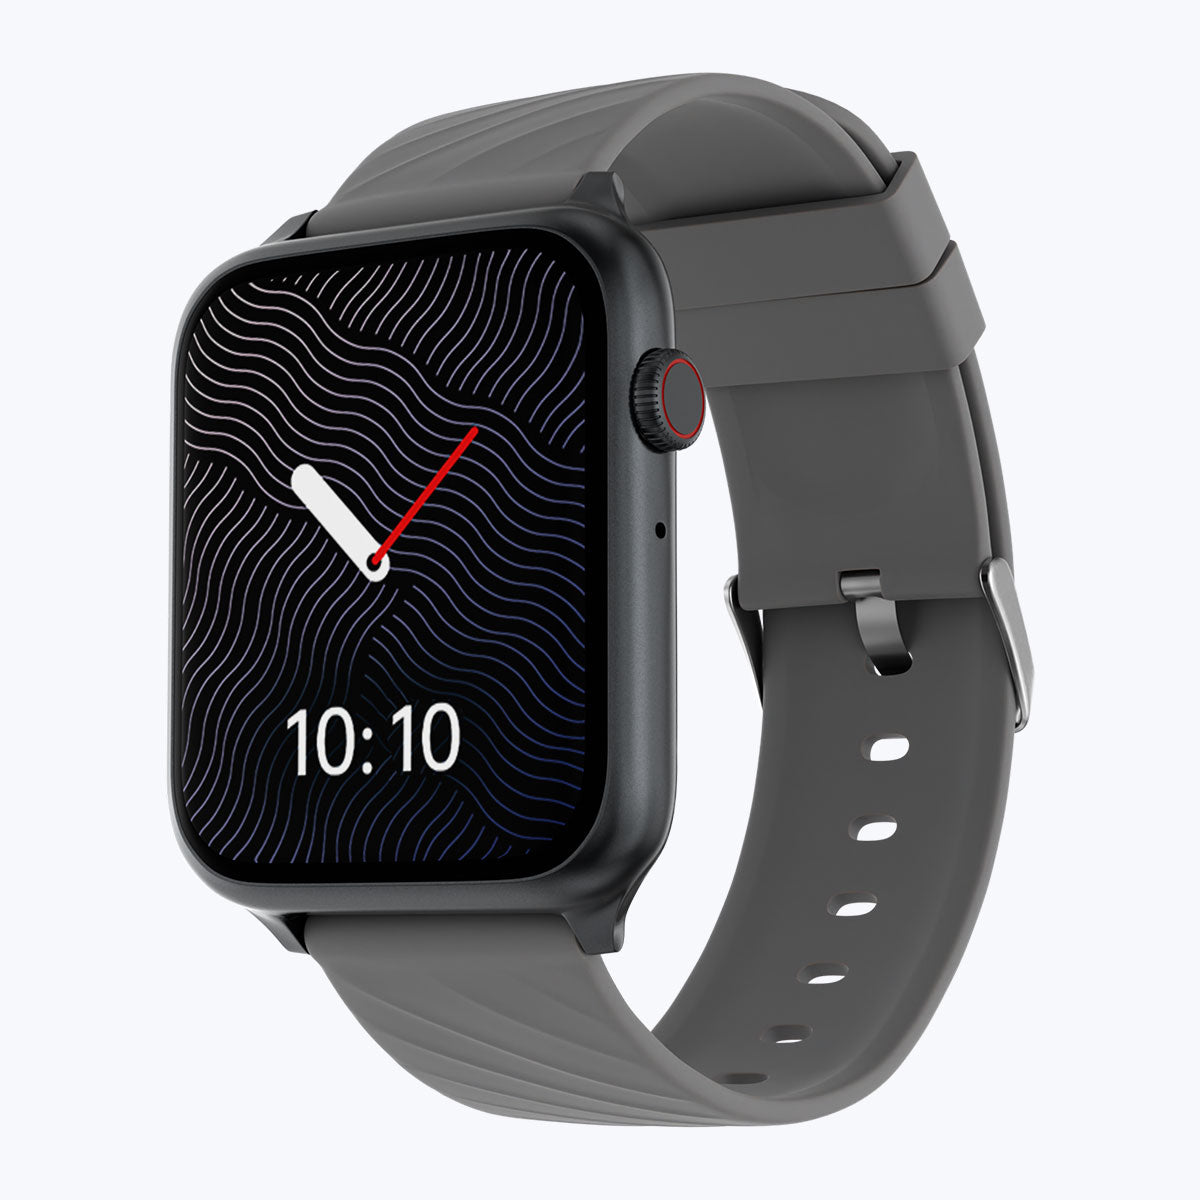 Iconic Lite - Smart Watch - Zebronics